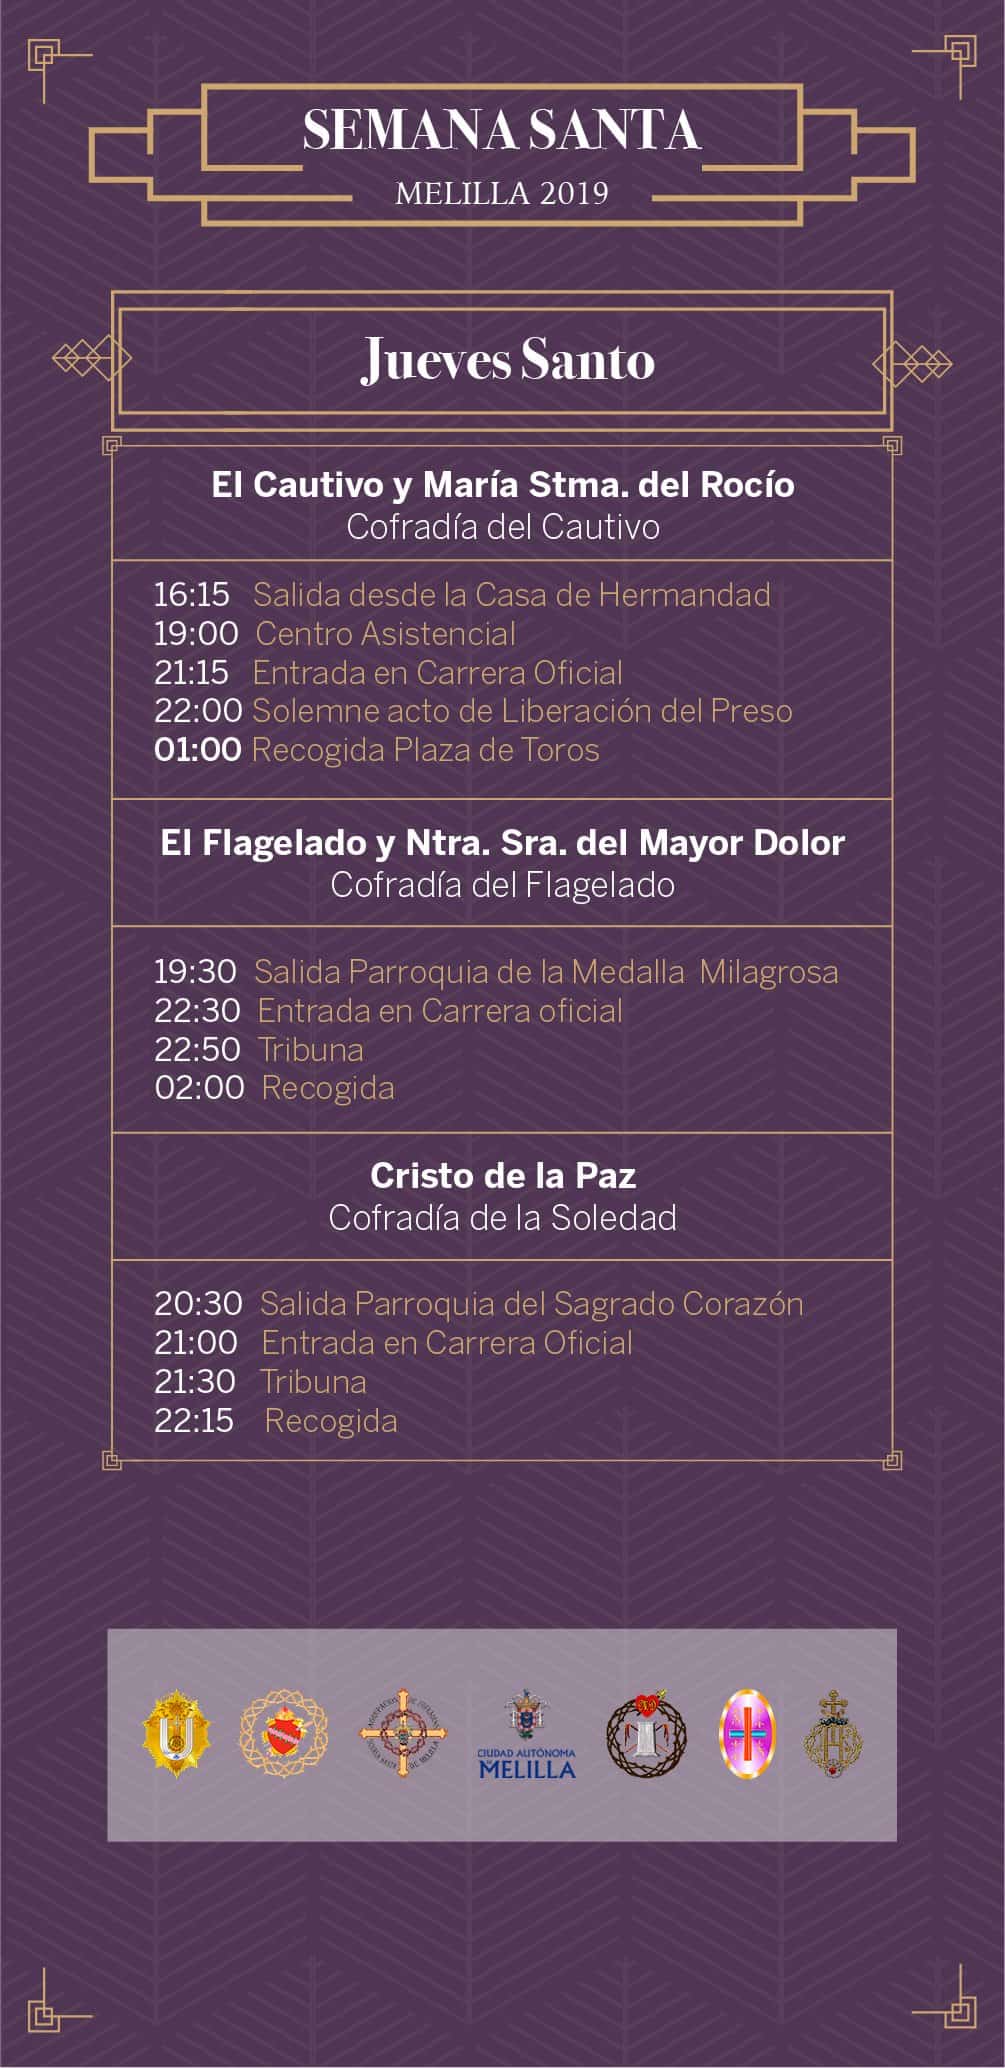 Jueves Santo Semana Santa Melilla 2019